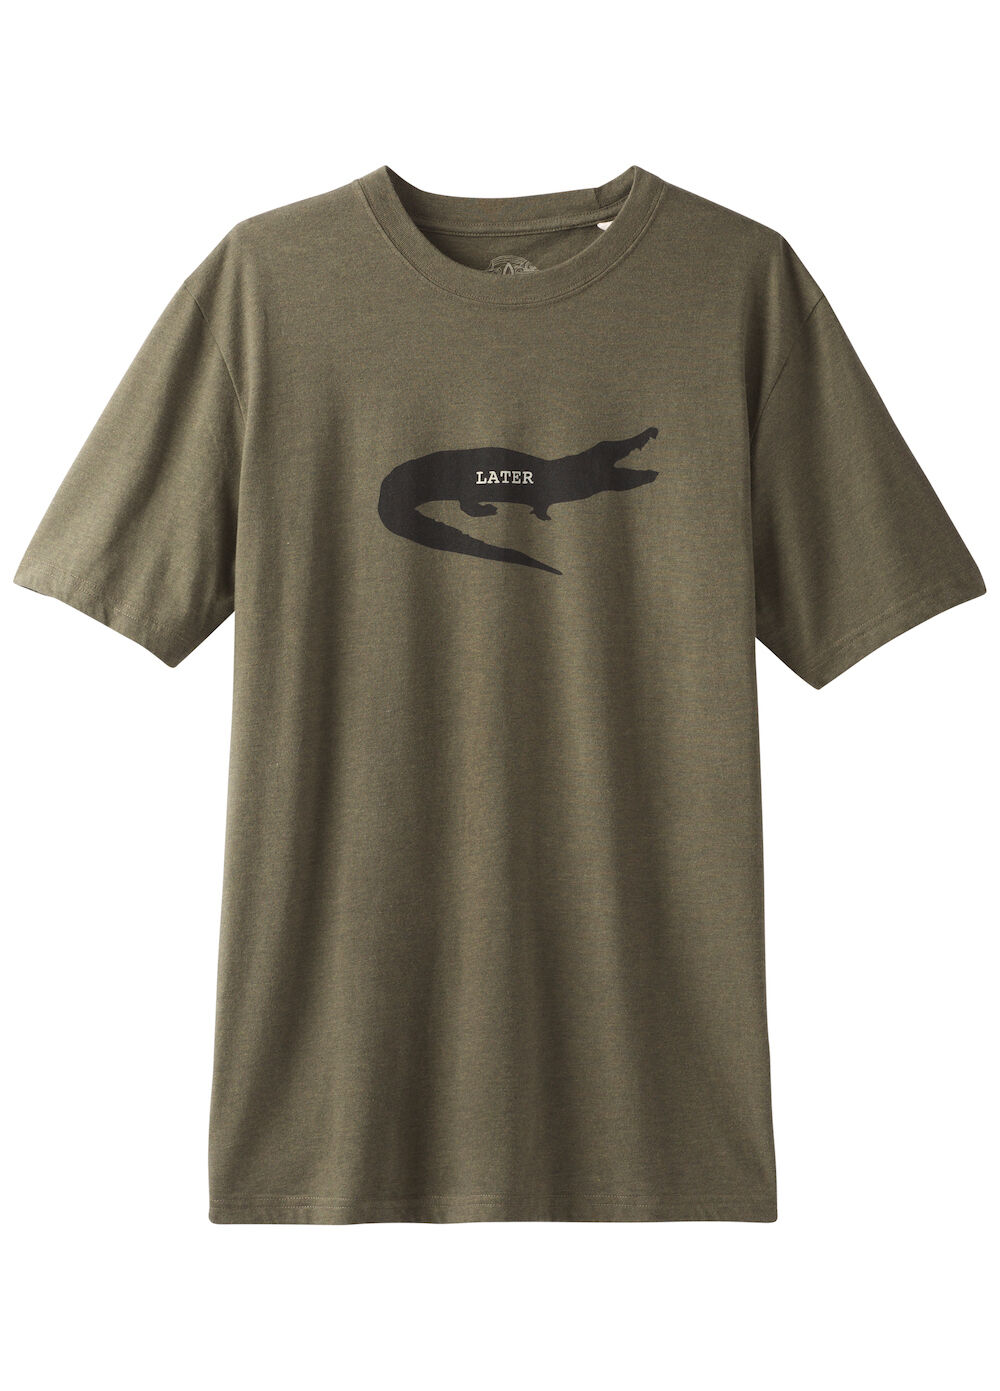 Prana Later Gator Journeyman - T-shirt Herrer